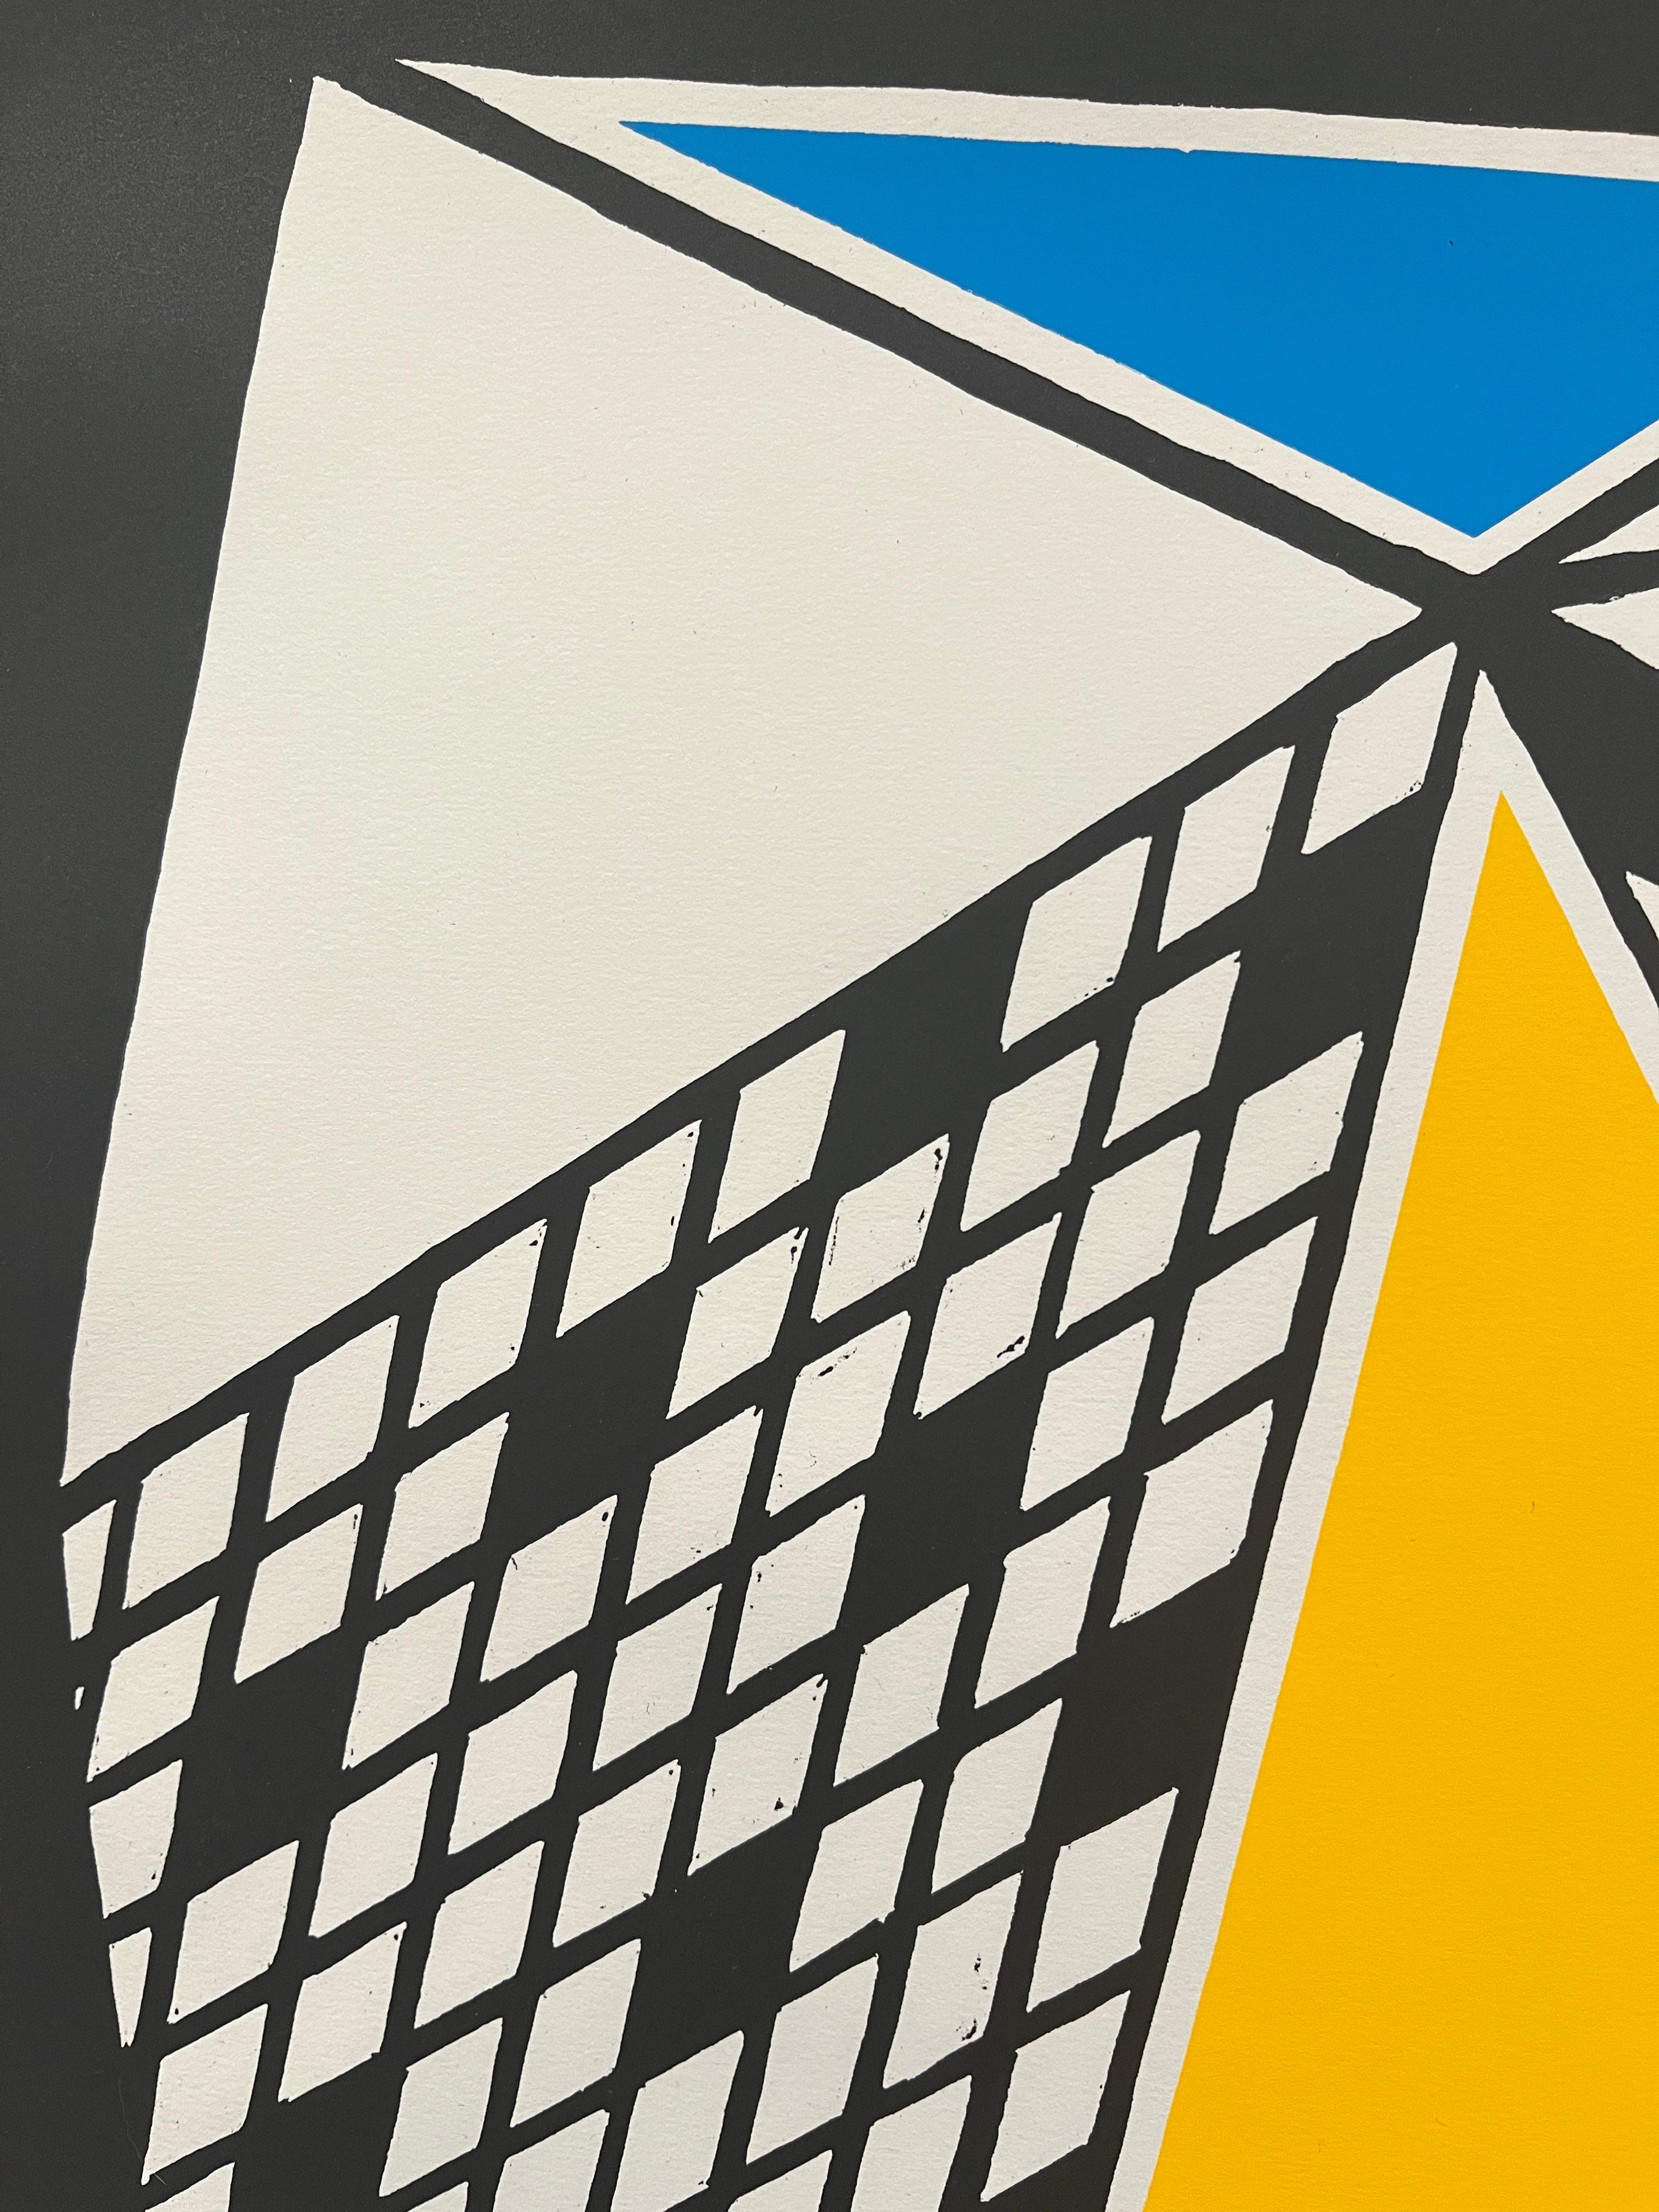 Untitled: Geometric Abstract Contemporary Primary Colors Silkscreen Print  - Yellow Abstract Print by Bernardo Navarro Tomas